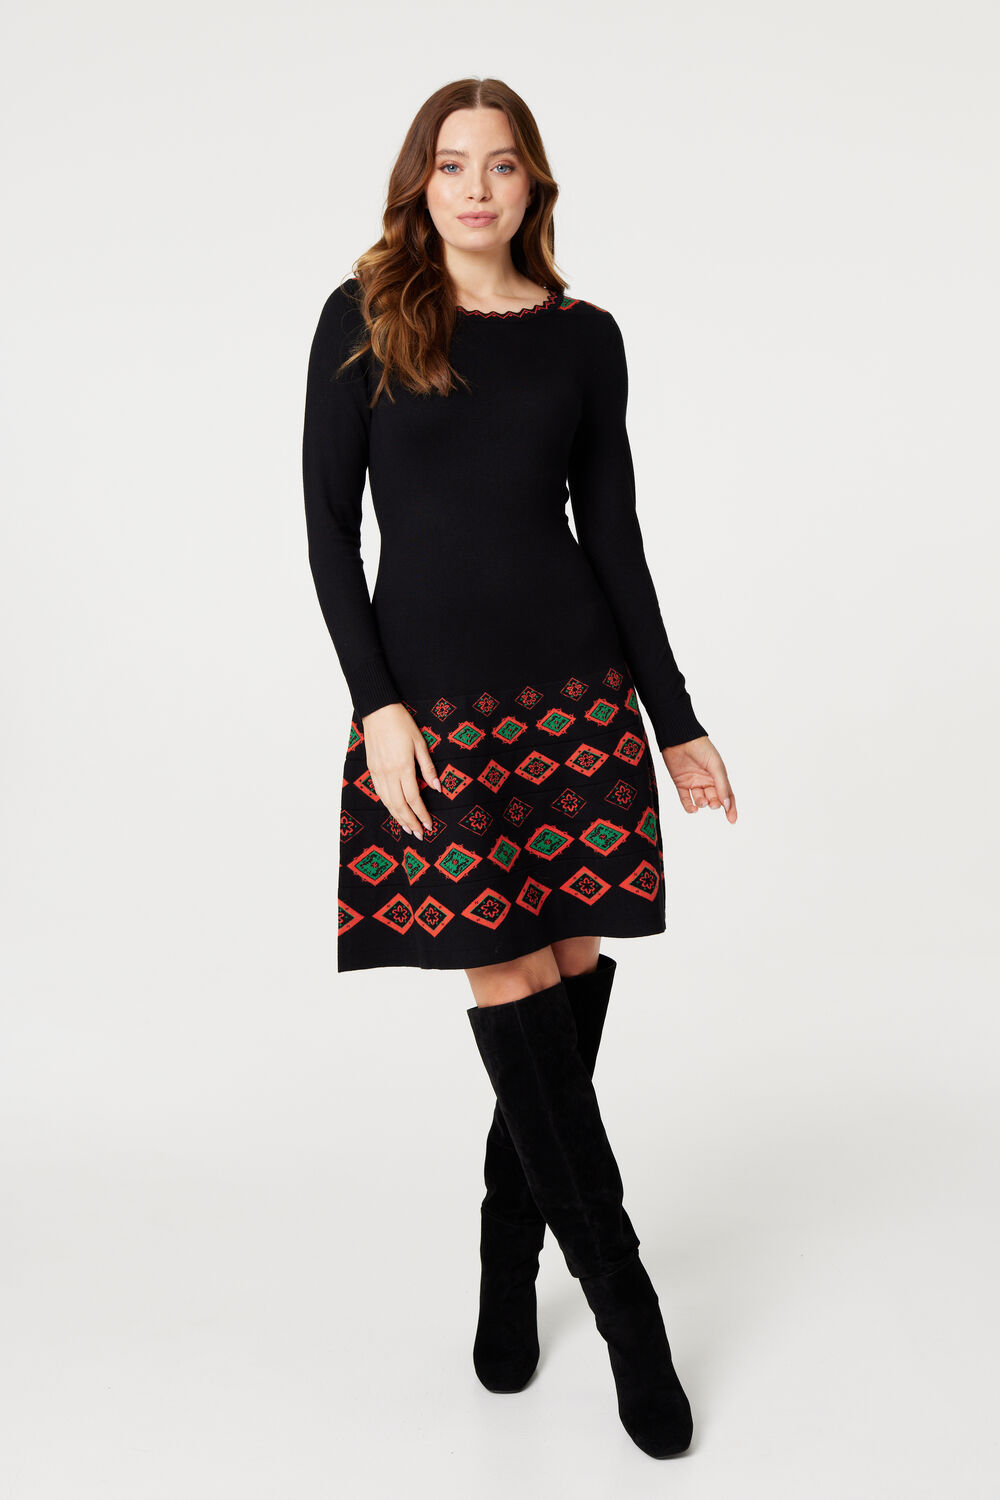 Izabel London Black - Printed Fit and Flare Knit Dress, Size: 10